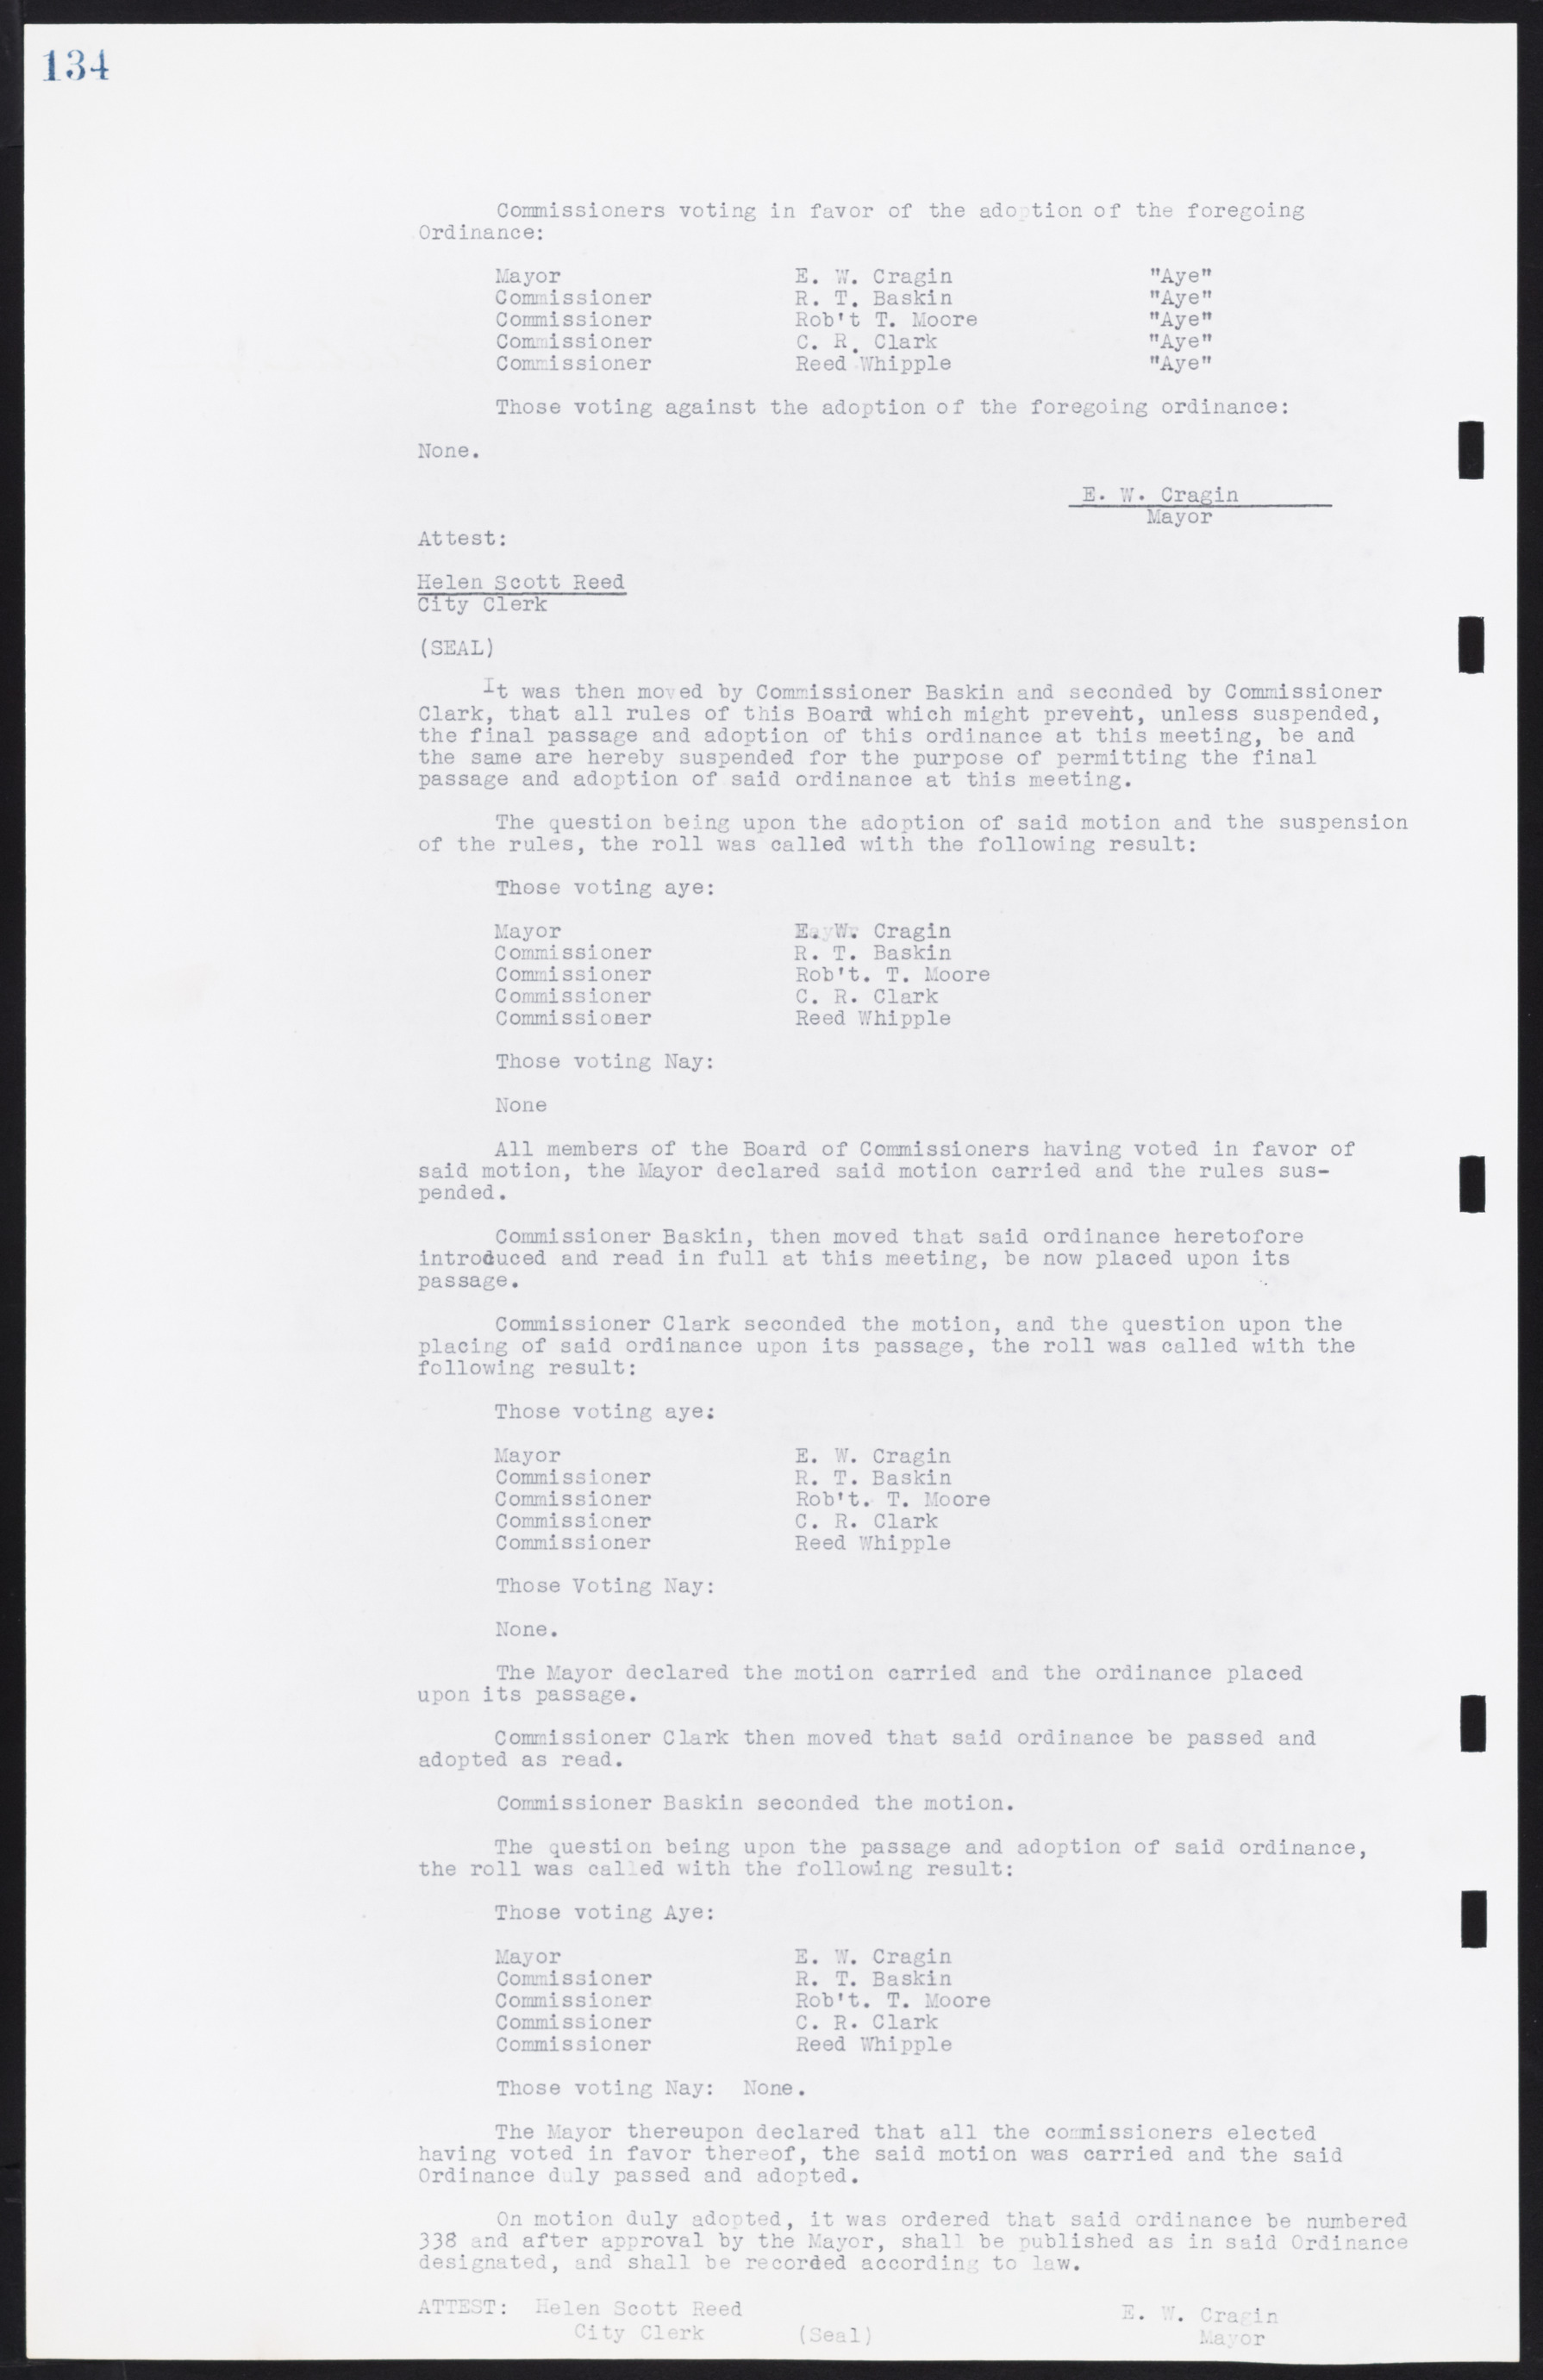 Las Vegas City Commission Minutes, January 7, 1947 to October 26, 1949, lvc000006-152